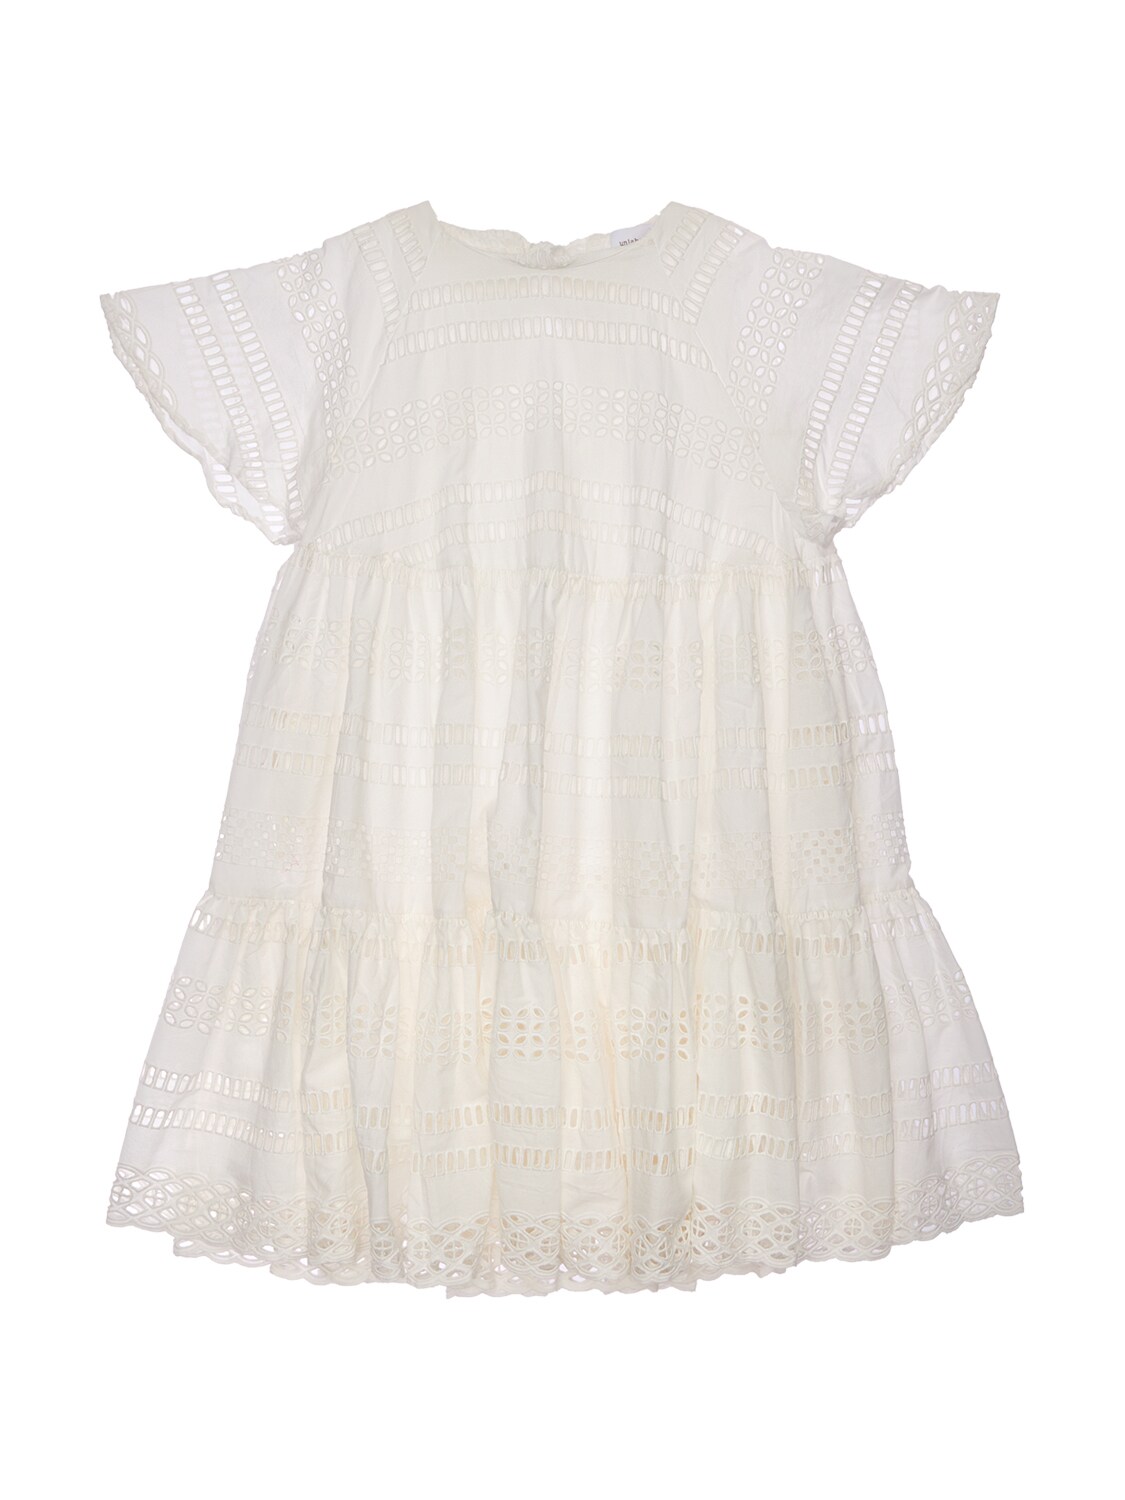 Unlabel Kids' Cotton Eyelet Lace Dress In White